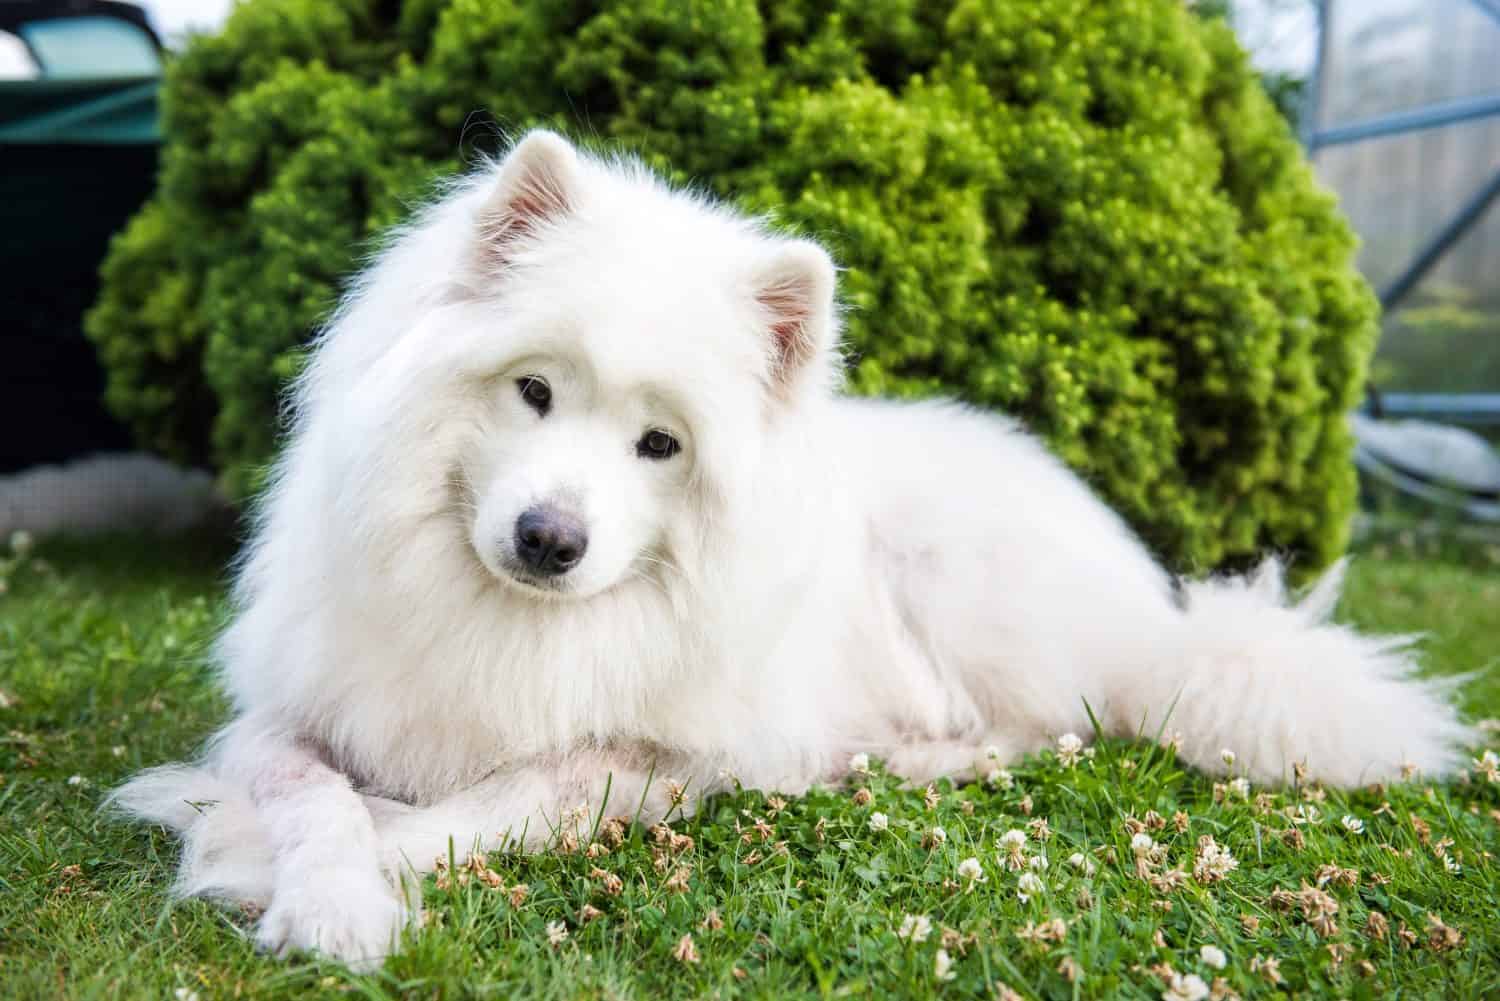 Big white dog with fluffy hair of Samoyed breed